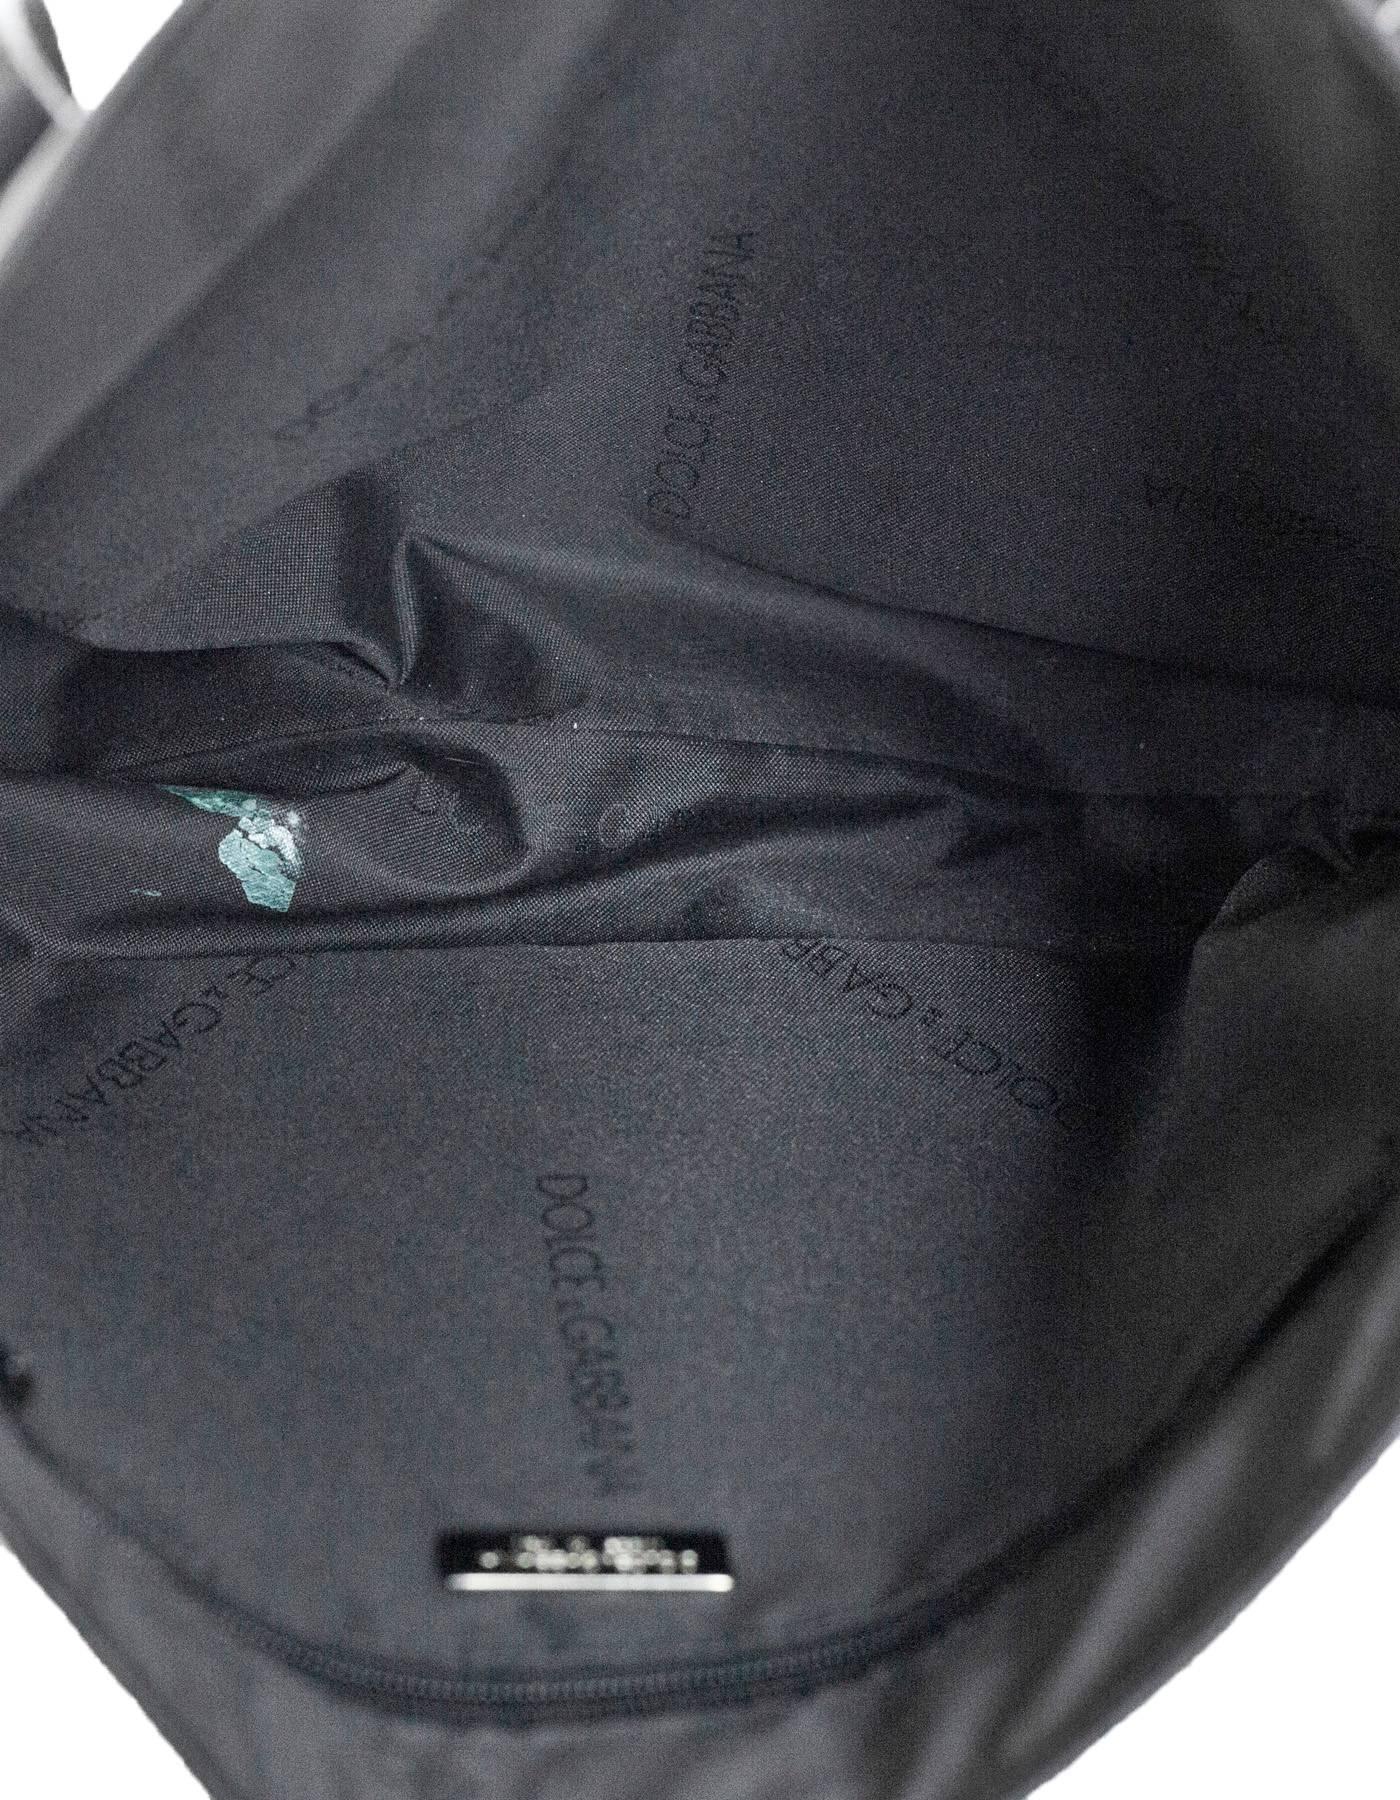 Dolce & Gabbana Black Leather Studded Tote Bag 2